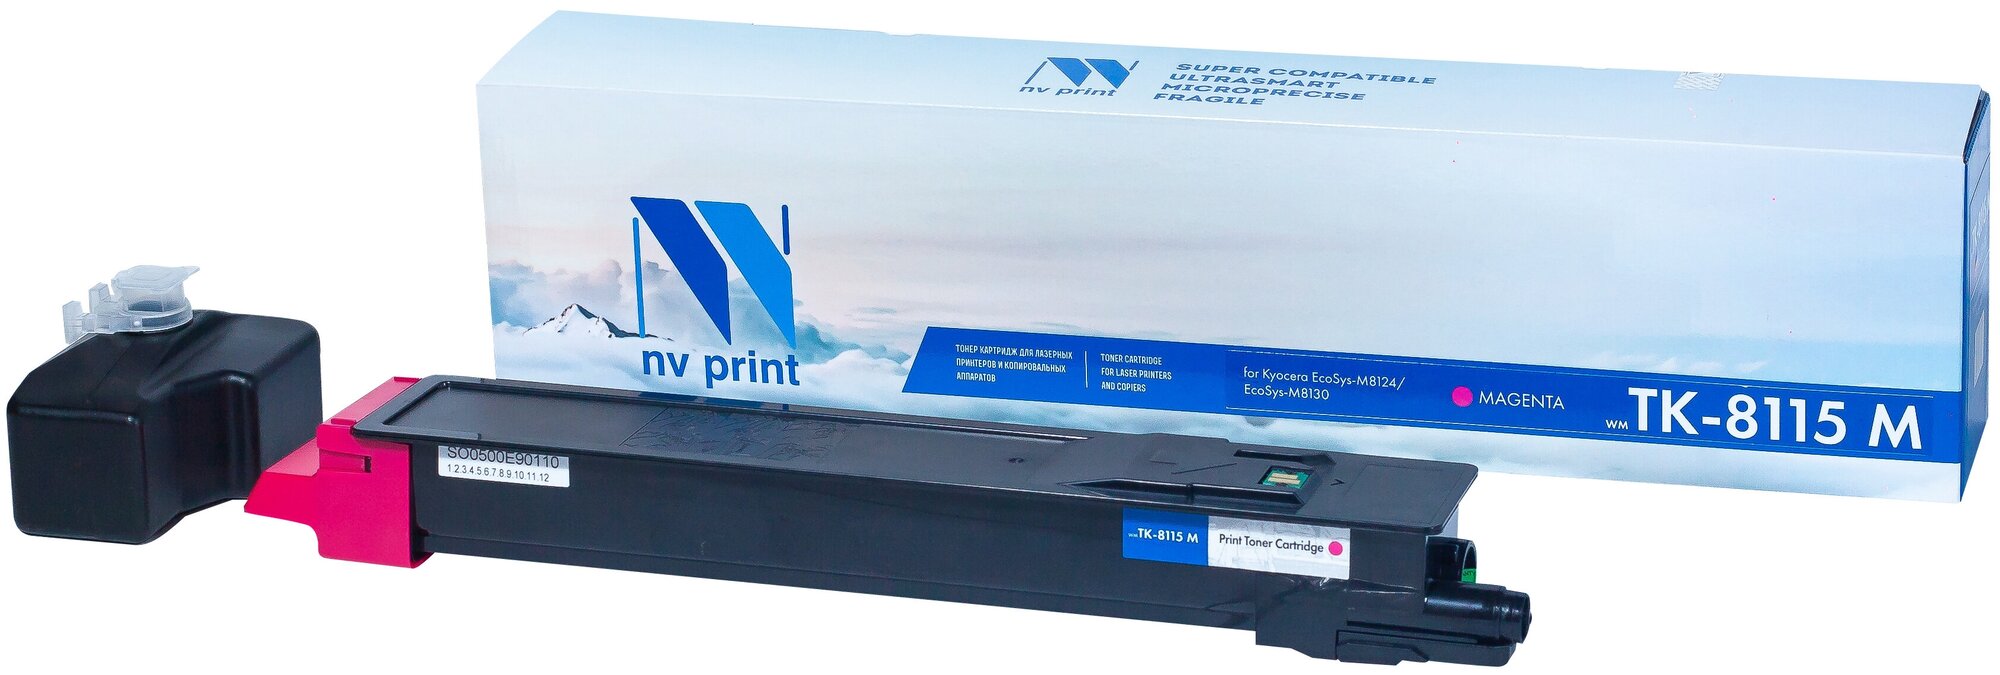 NV print Картридж NV Print совместимый NV-TK-8115 Magenta для Kyocera EcoSys-M8124/EcoSys-M8130